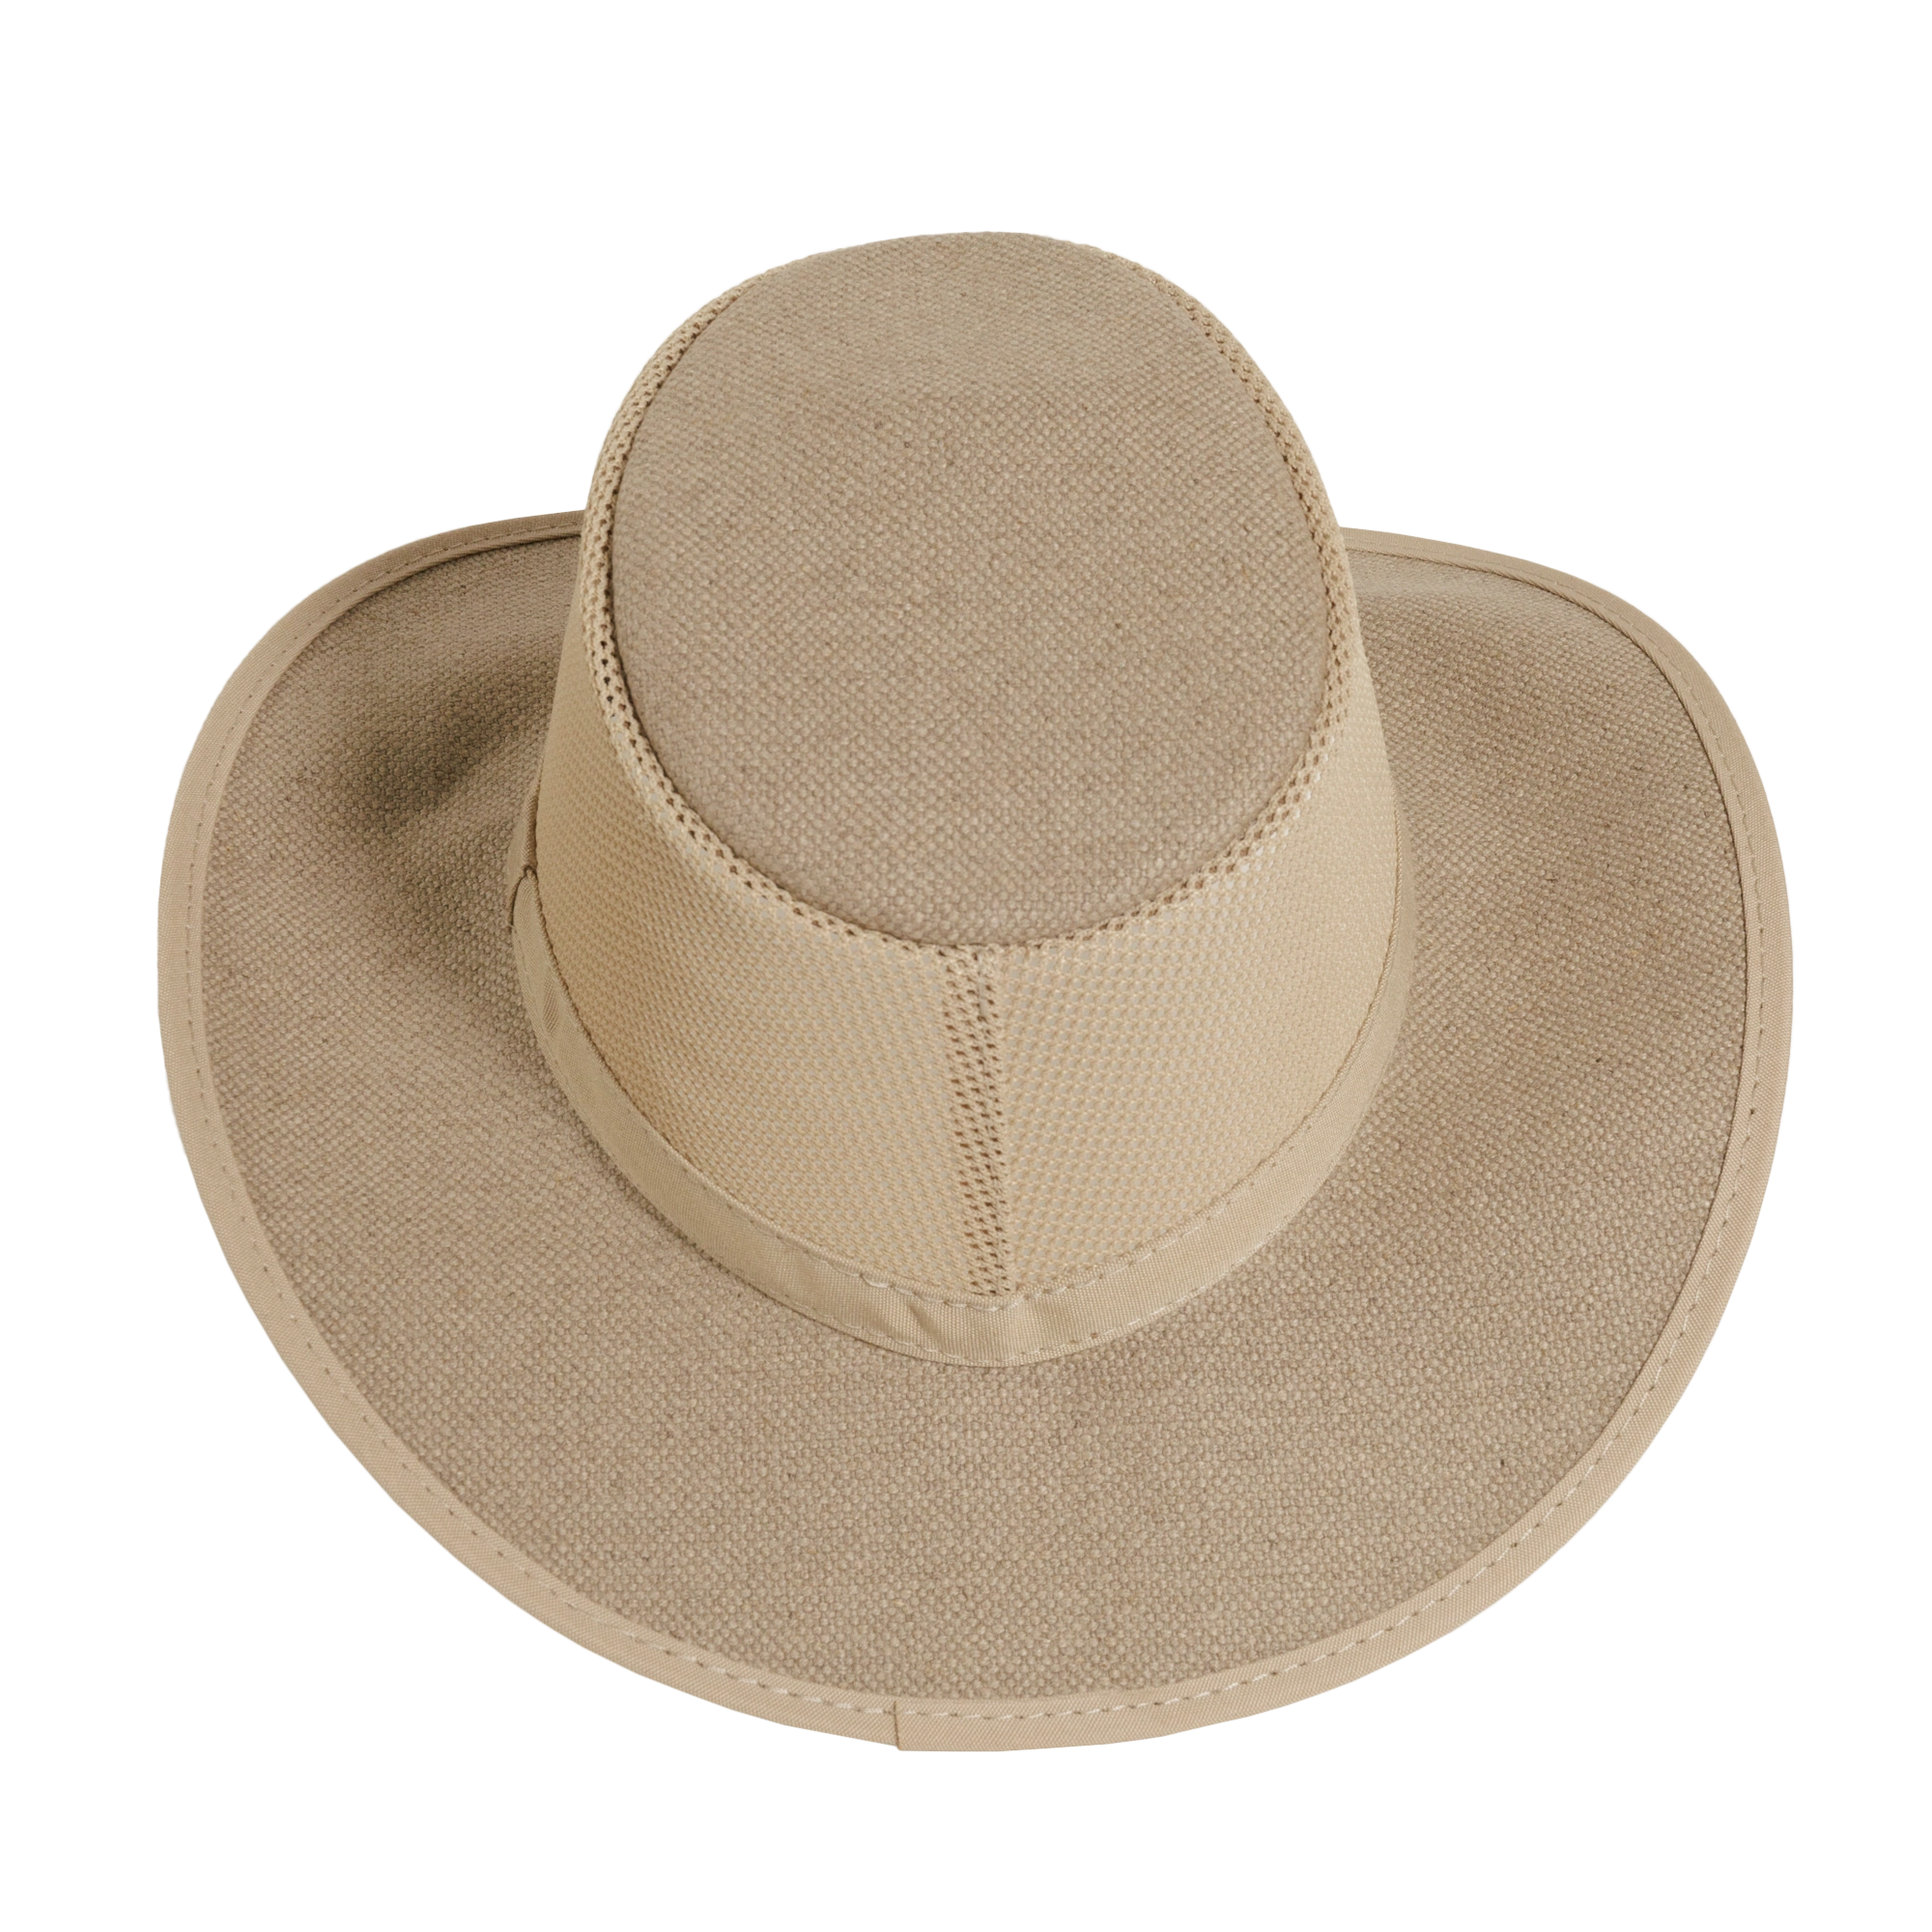 Willie Hemp Khaki Mesh Sun Hat by American Hat Makers Top View